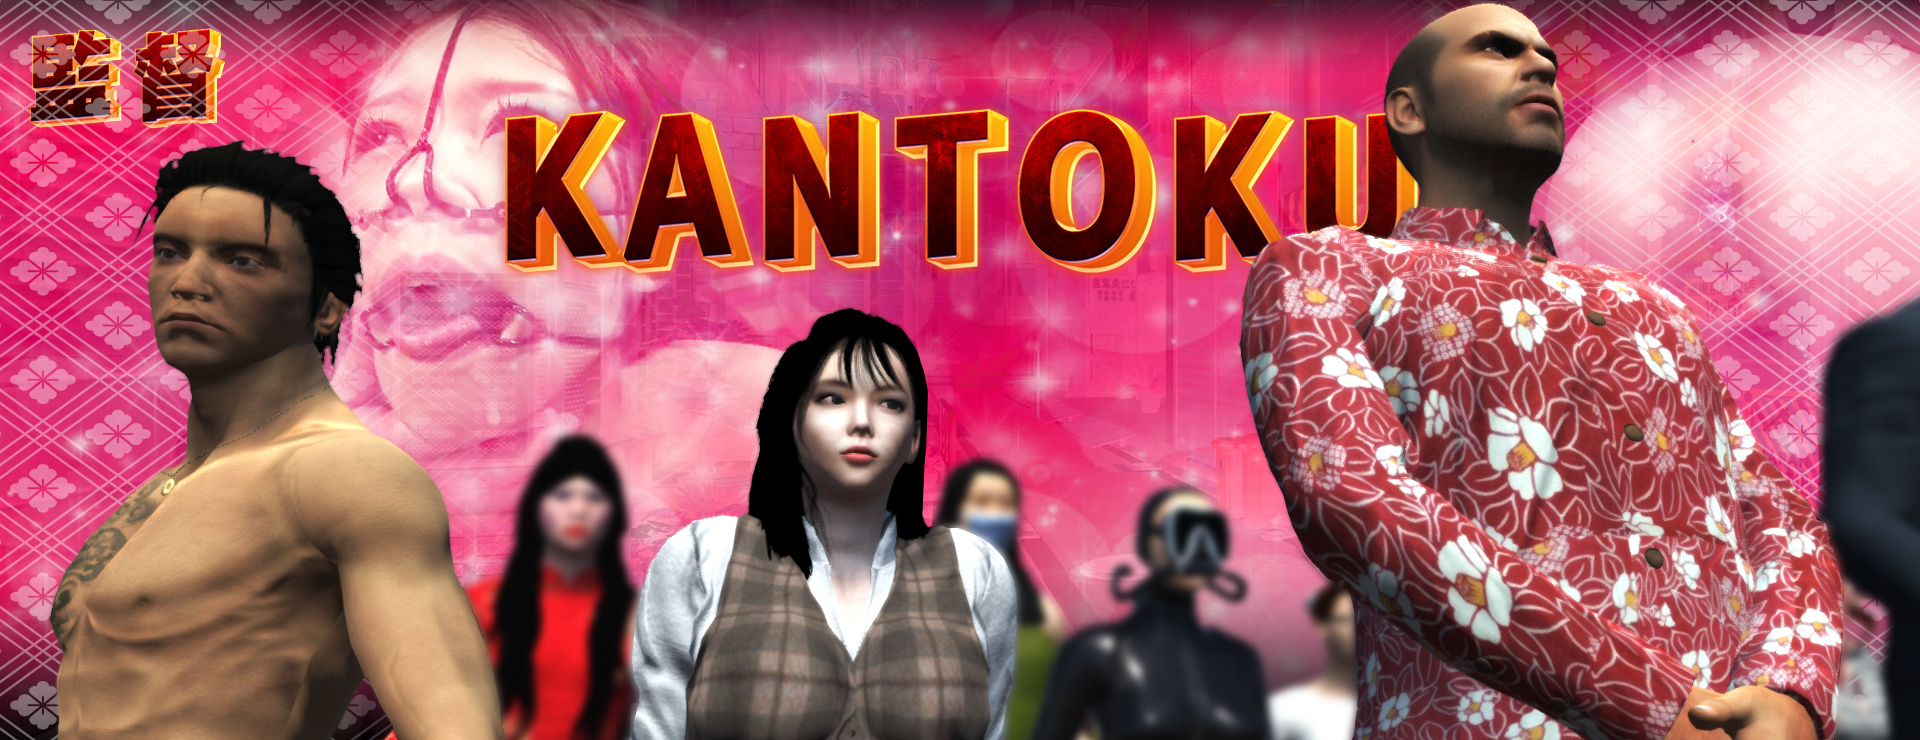 Kantoku - Action Adventure Game